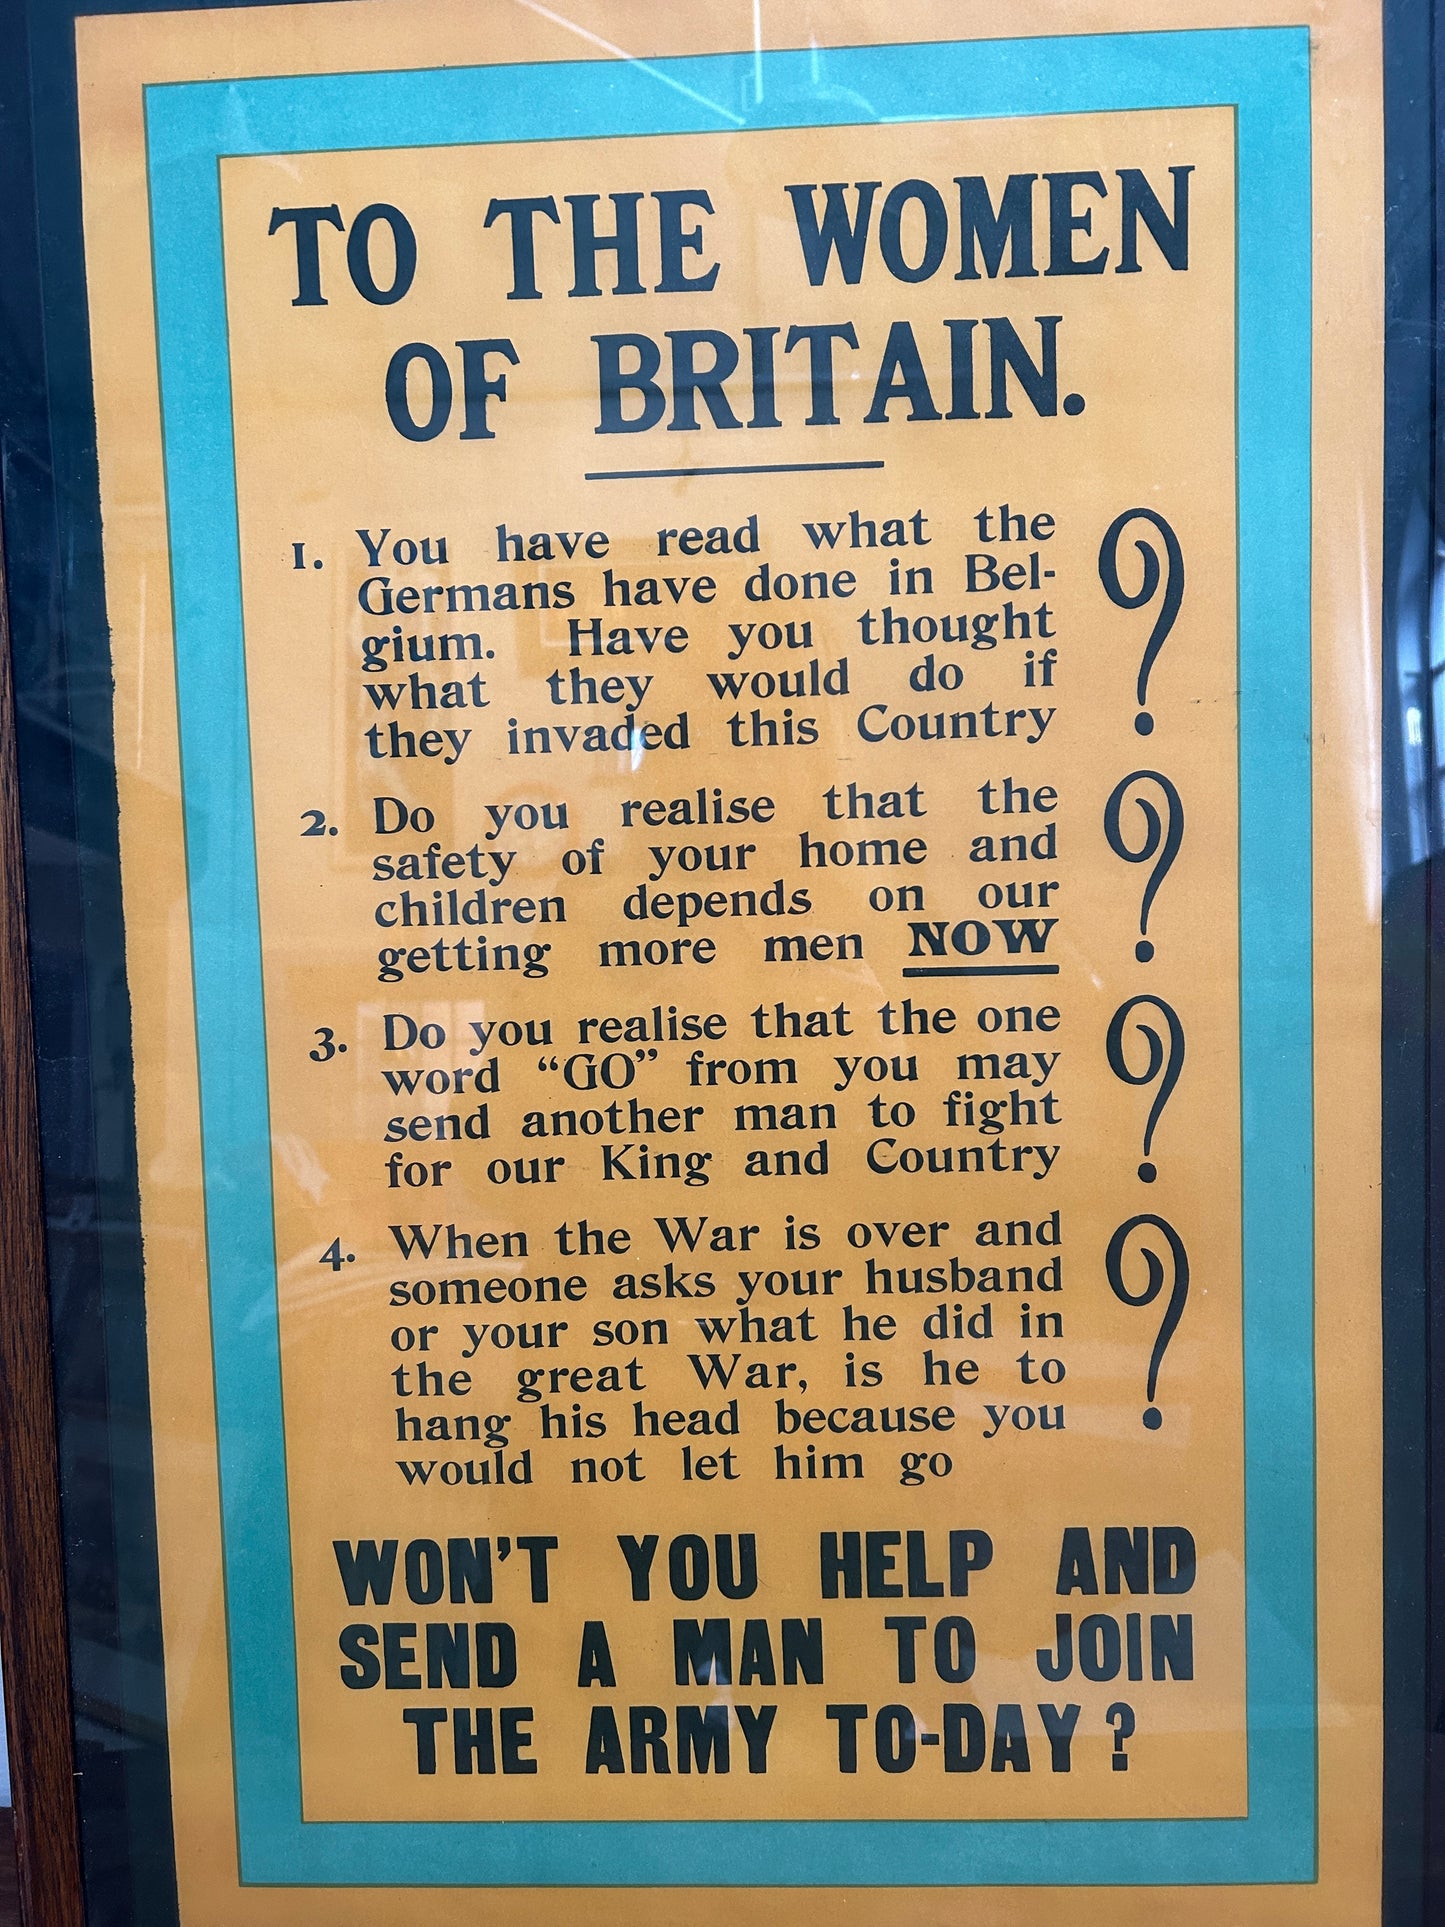 Rare and original 1915 WW1 Recruiting Poster Beautifully Framed